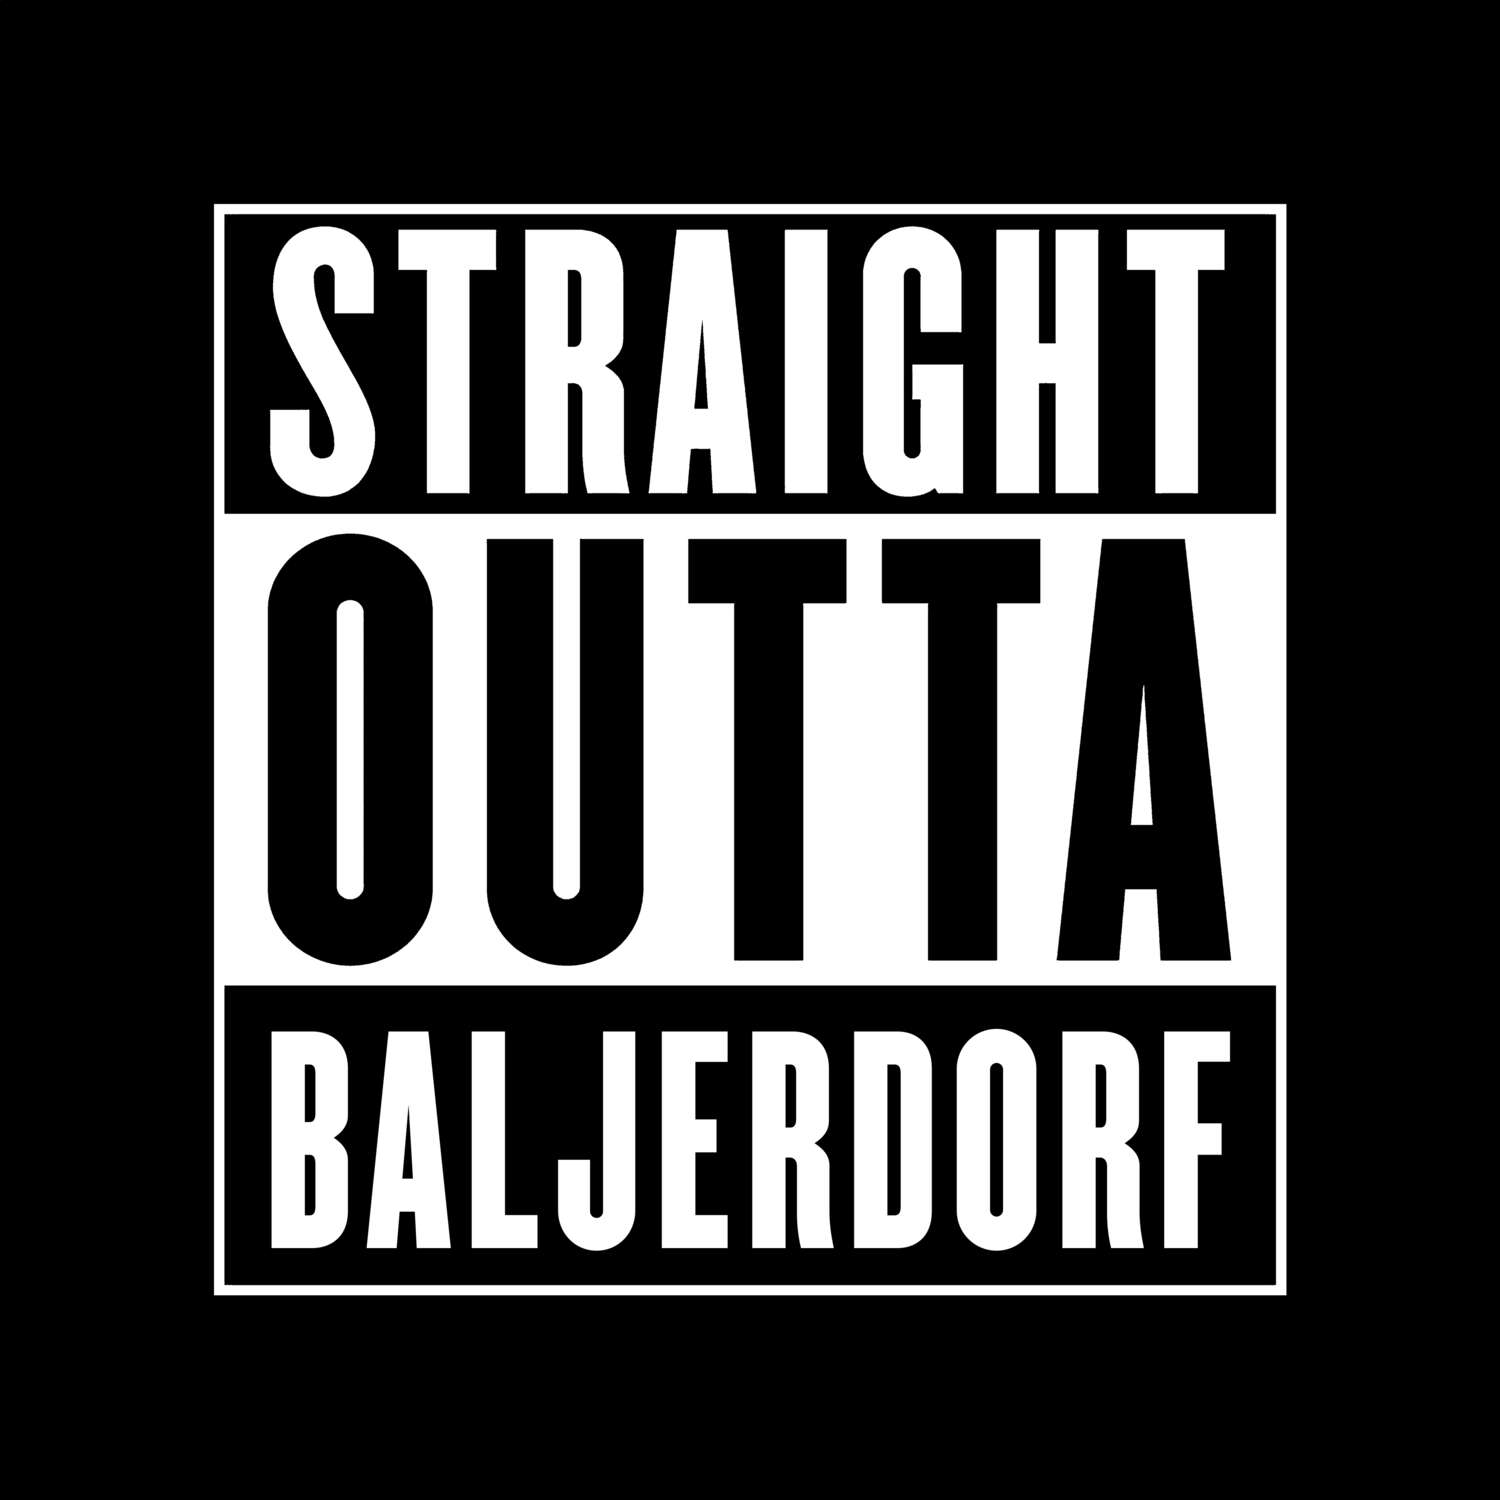 Baljerdorf T-Shirt »Straight Outta«